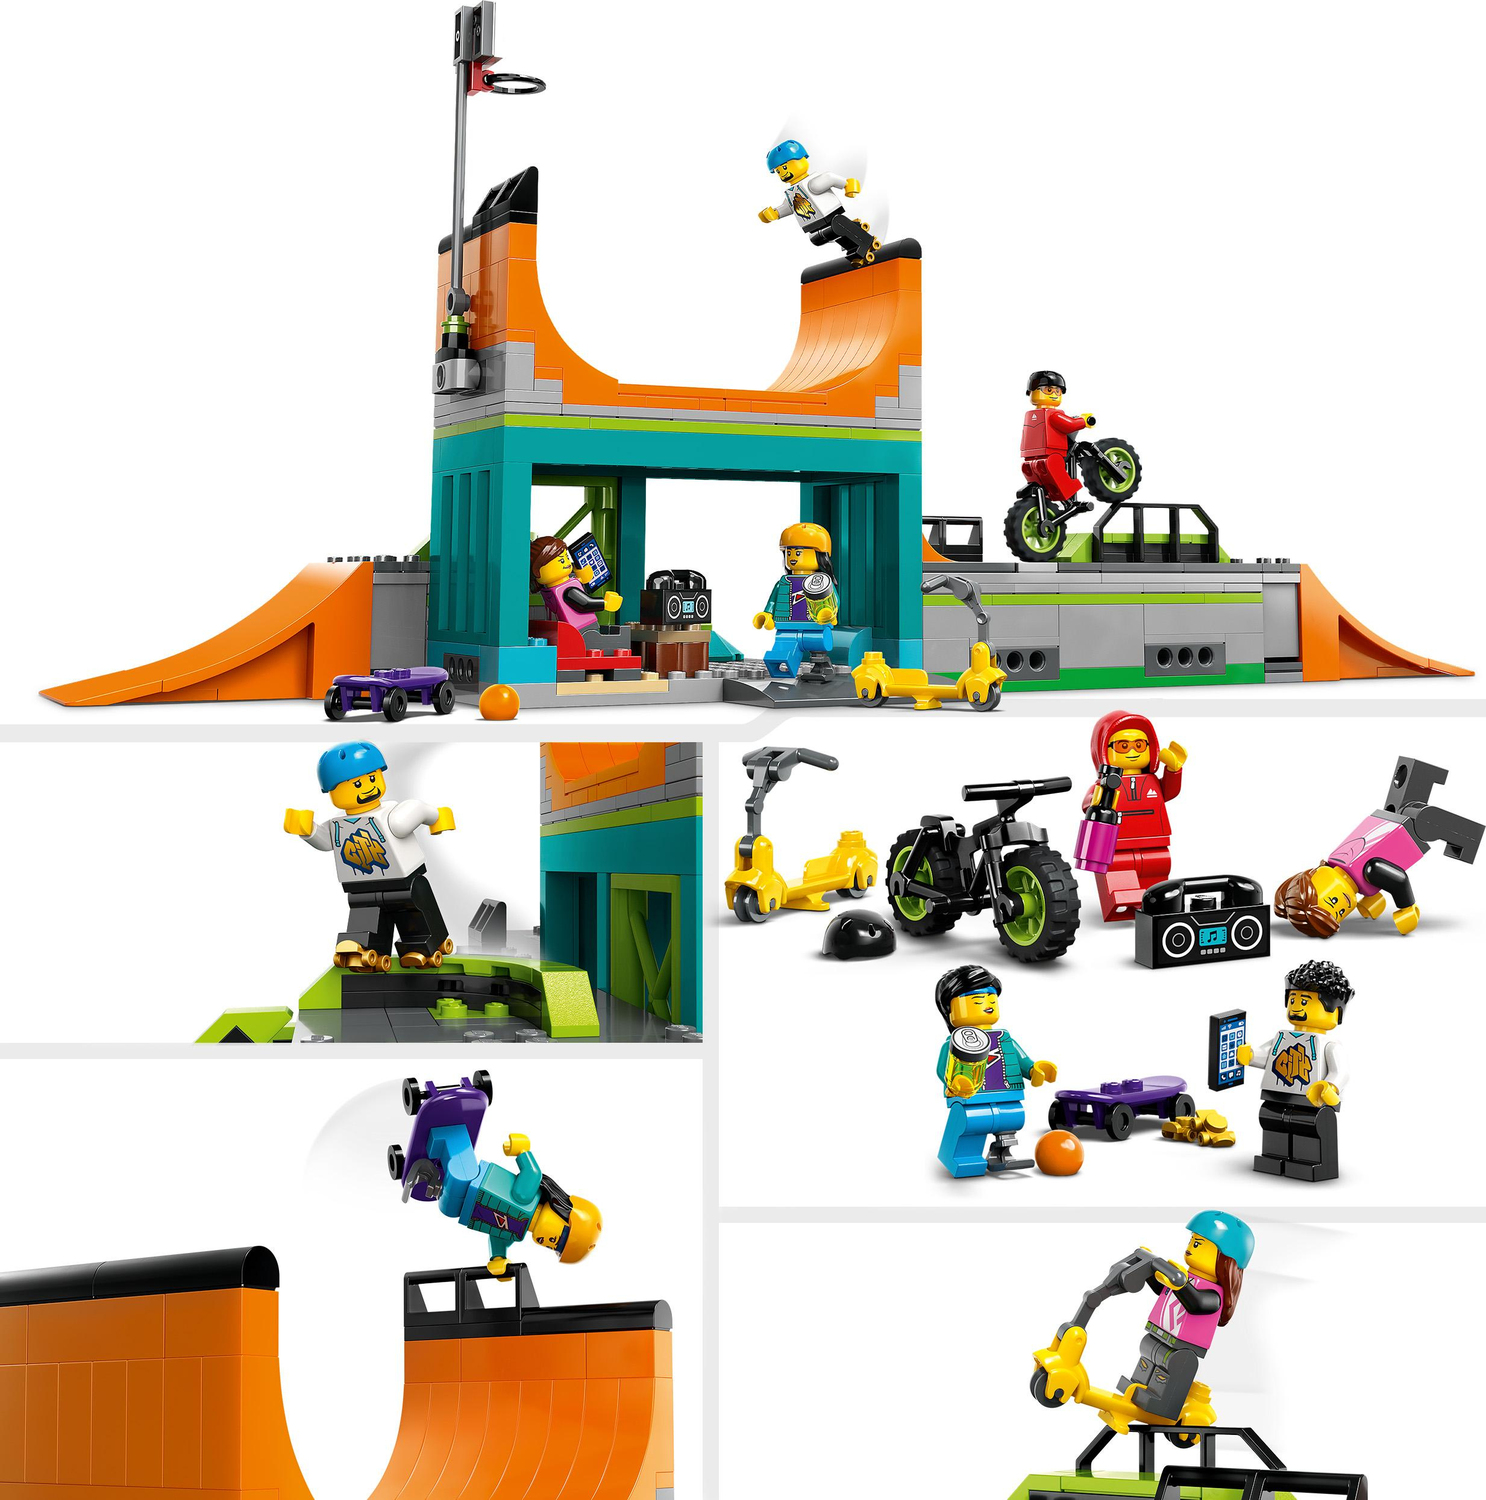  LEGO City Street Skate Park Building Toy Set, Includes